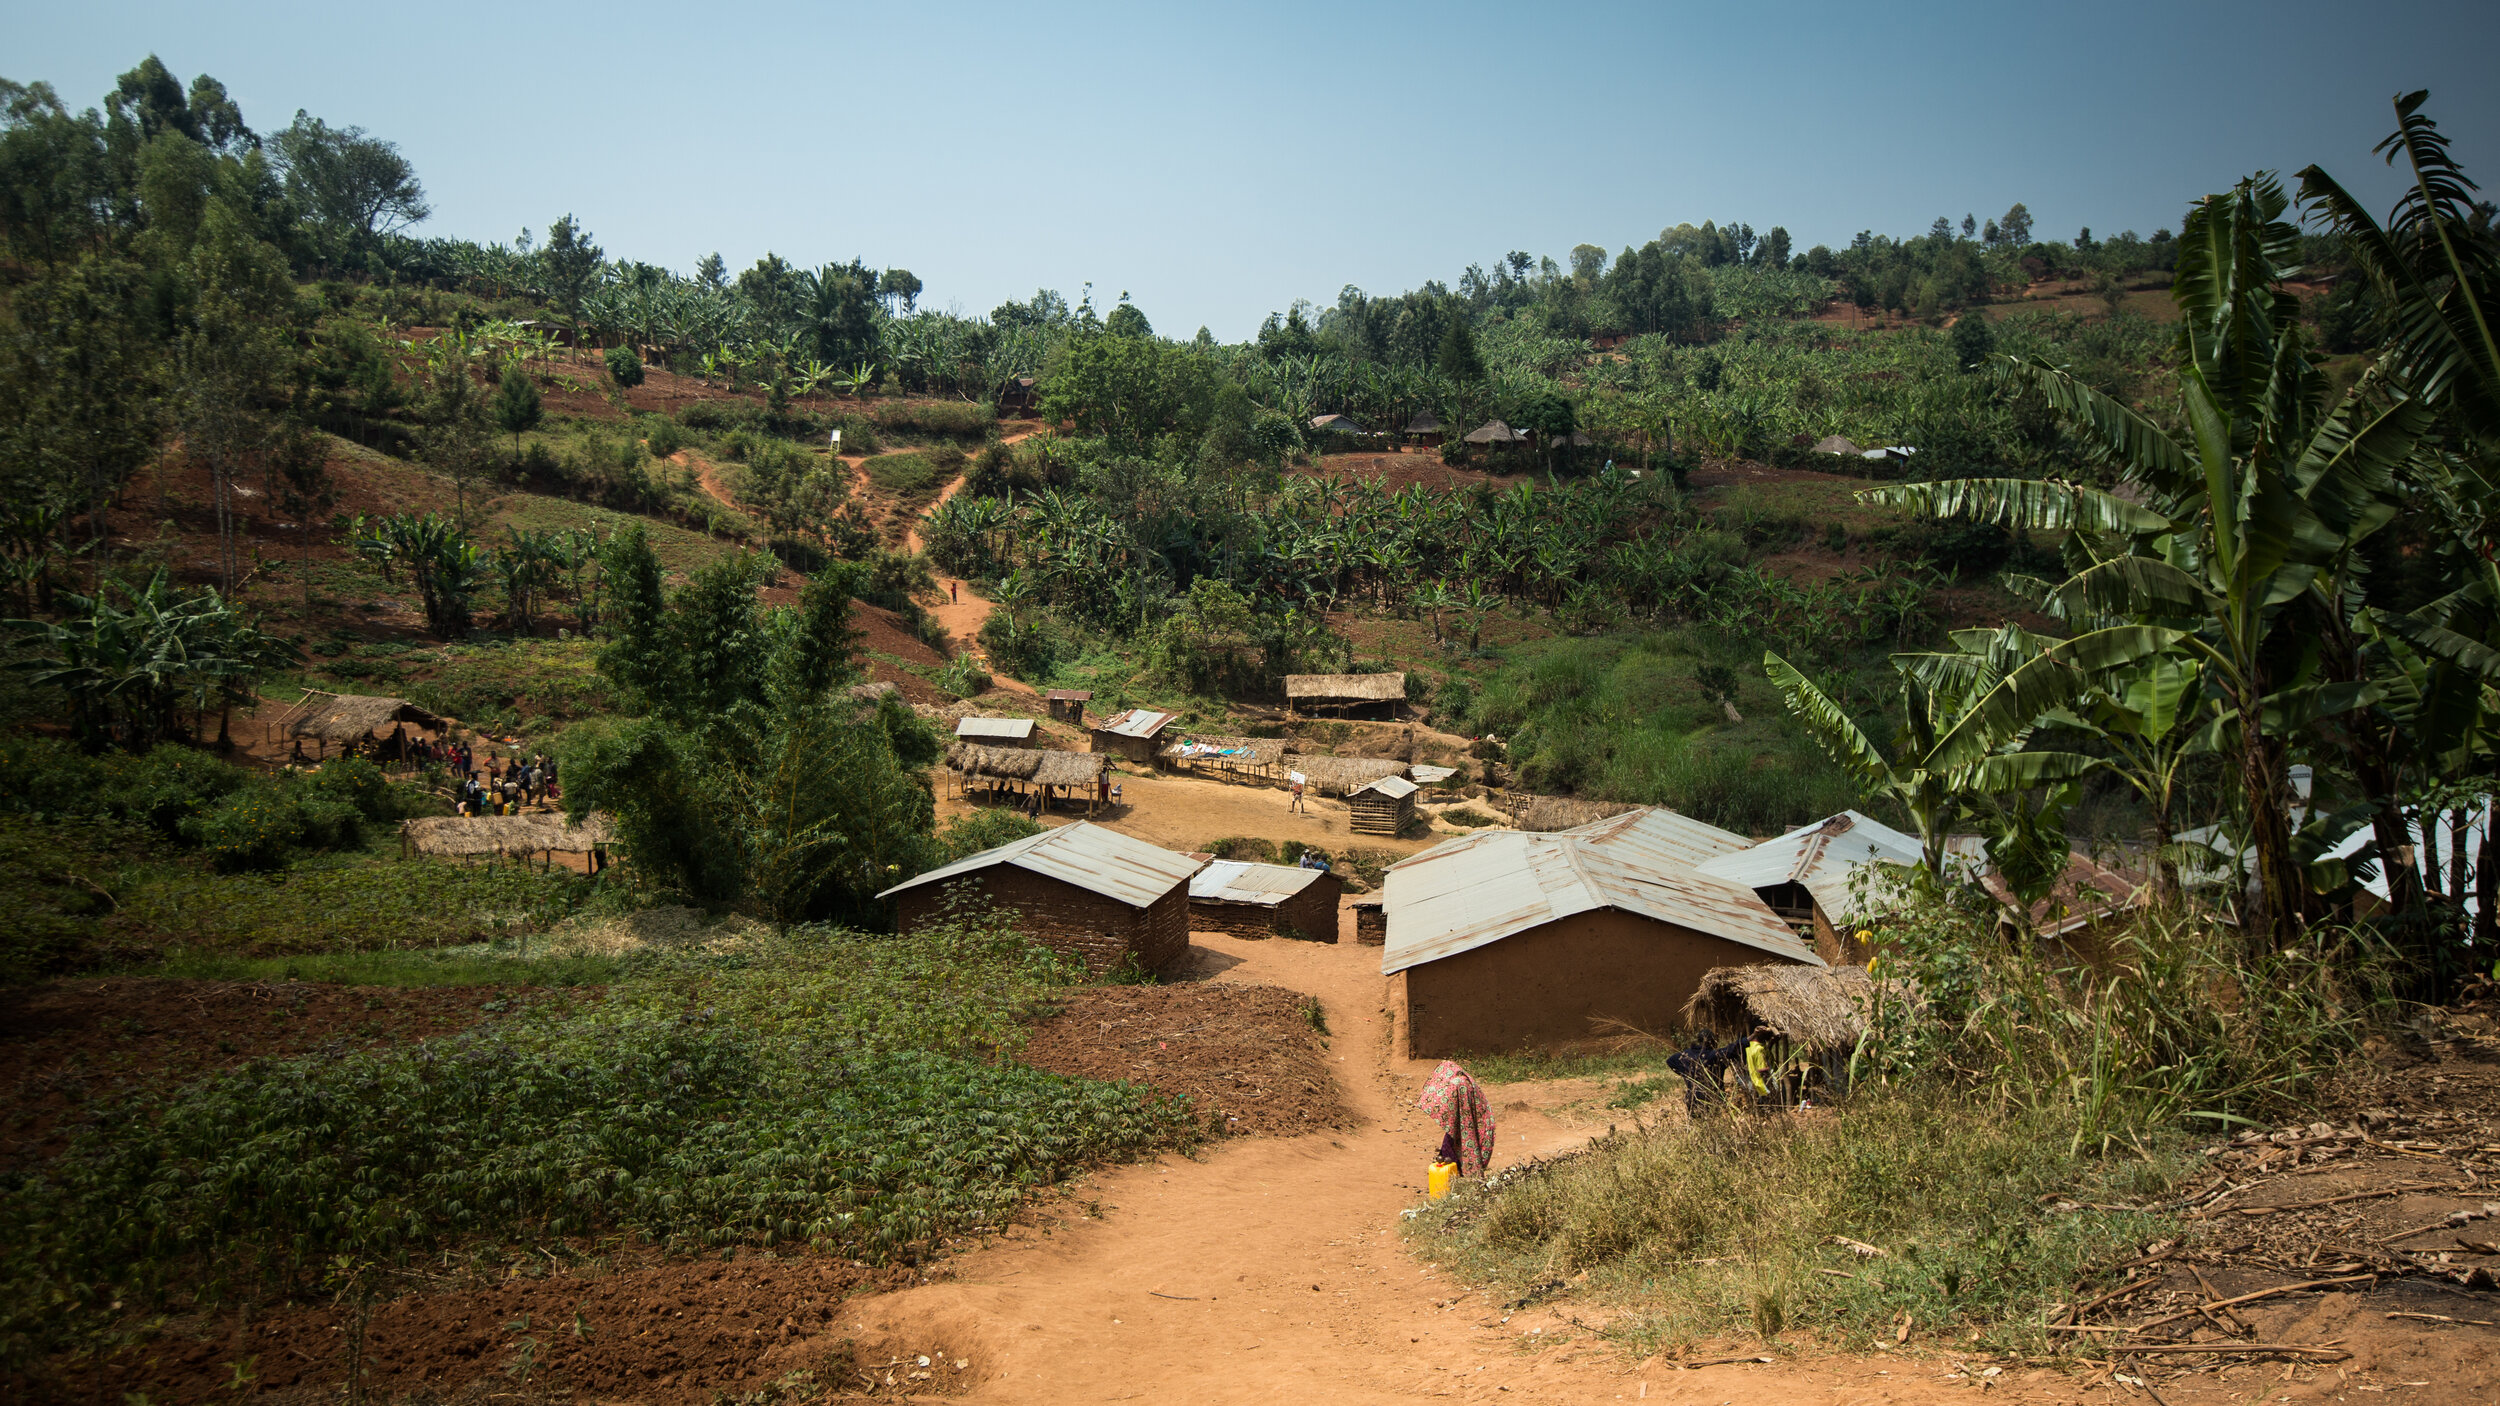  Nyamurale artisanal gold mining site, The Democratic Republic of Congo, August 2018 